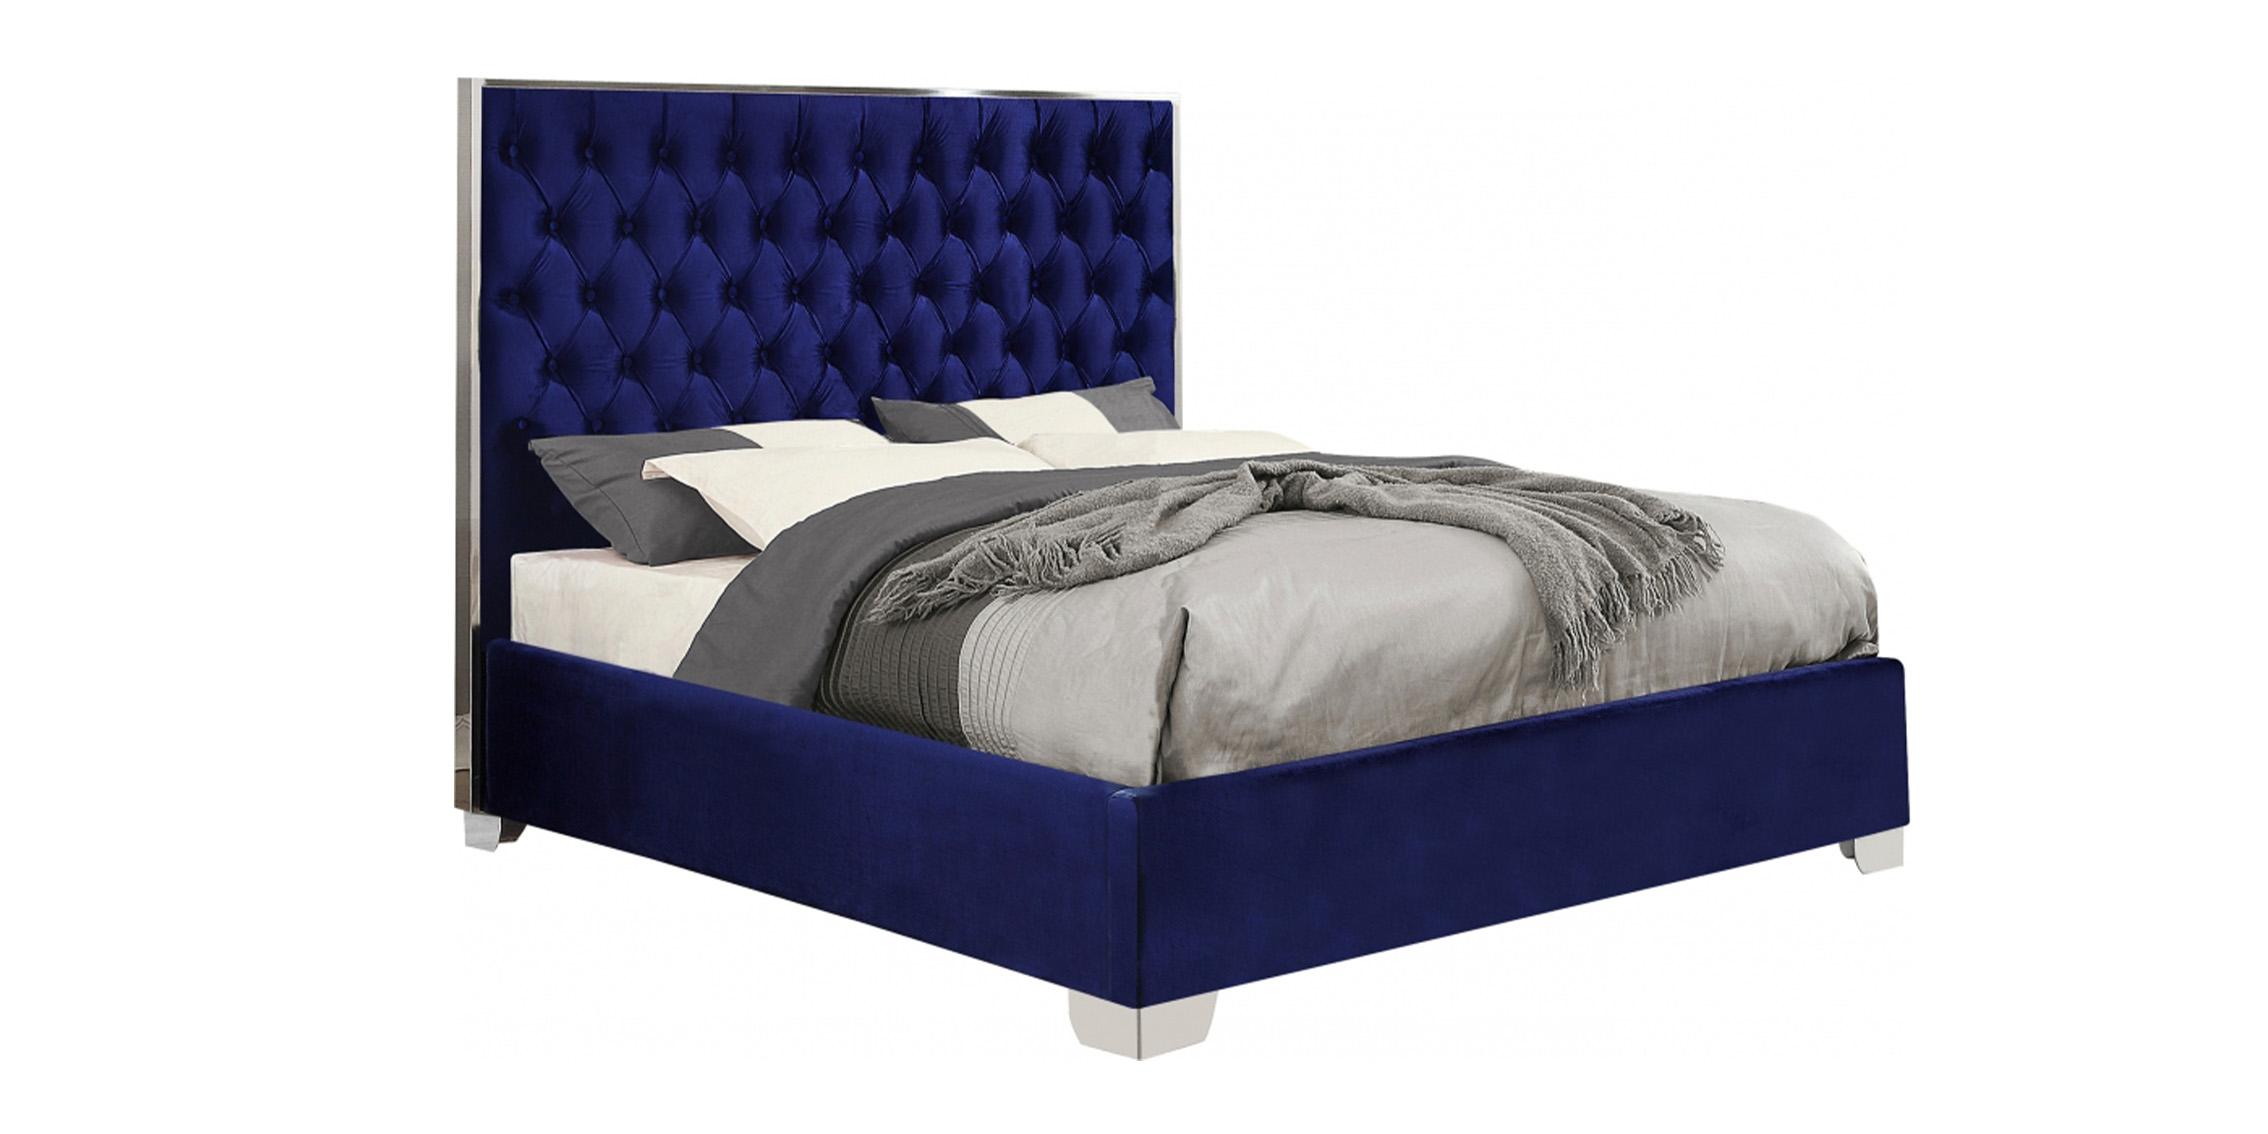 

    
Meridian Furniture LexiNavy-F Platform Bed Navy blue LexiNavy-F
